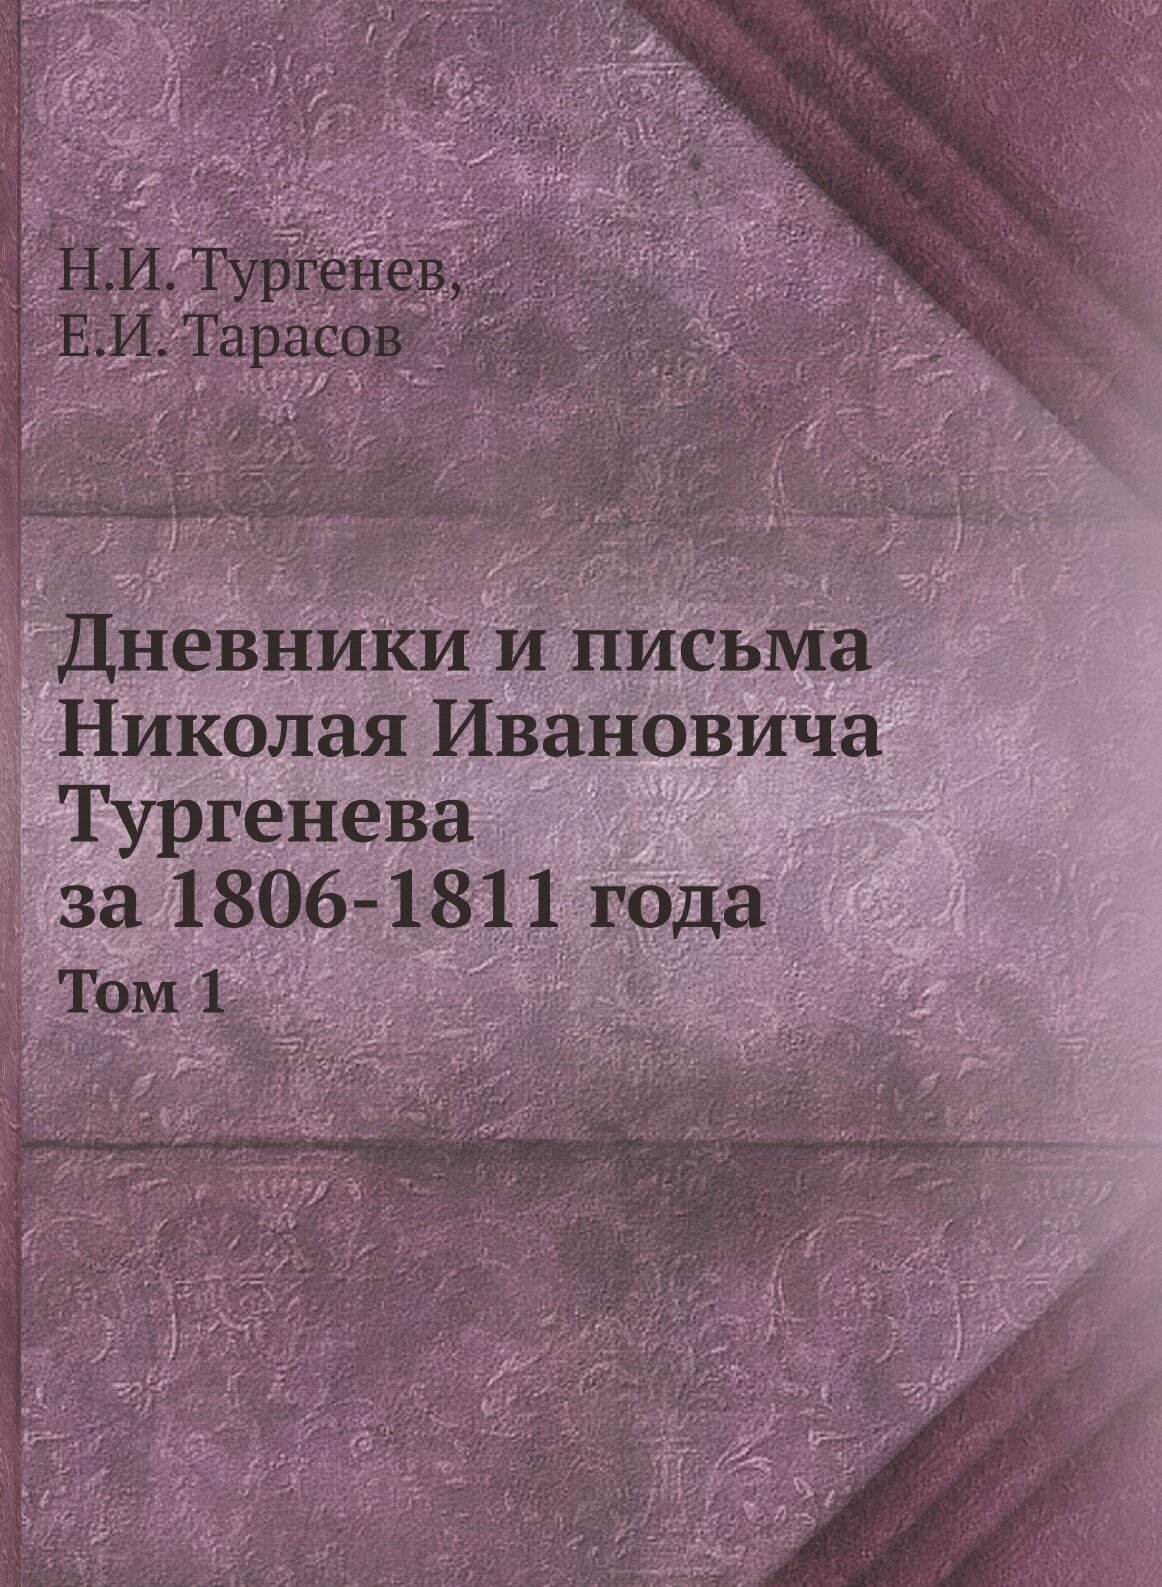 Дневники и письма Николая Ивановича Тургенева за 1806-1811 года. Том 1